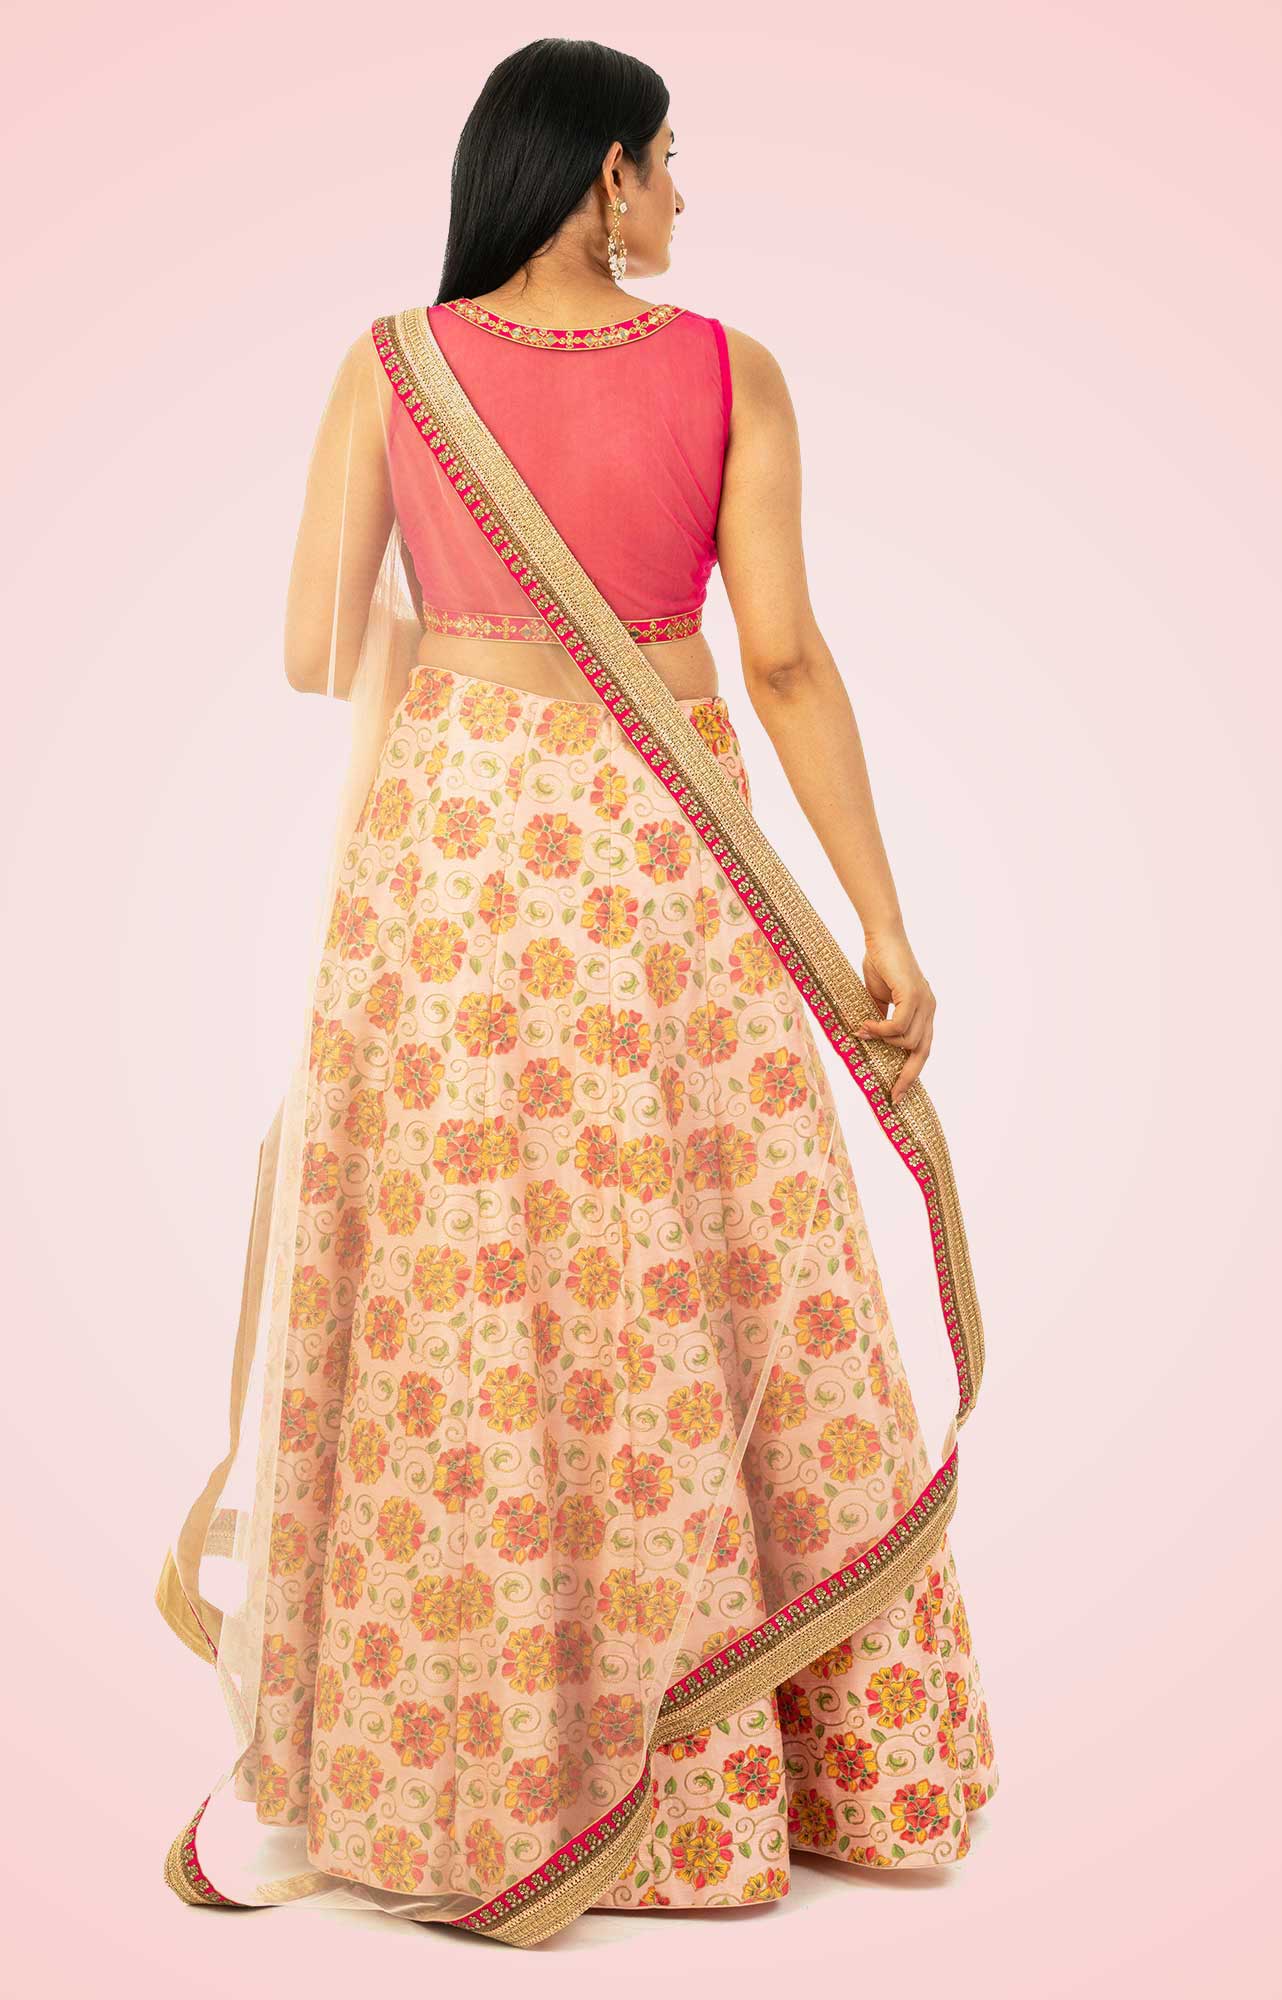 Floral Print Pink Lehenga With Mirror Work Blouse And Beige Colour Dupatta – Viraaya By Ushnakmals